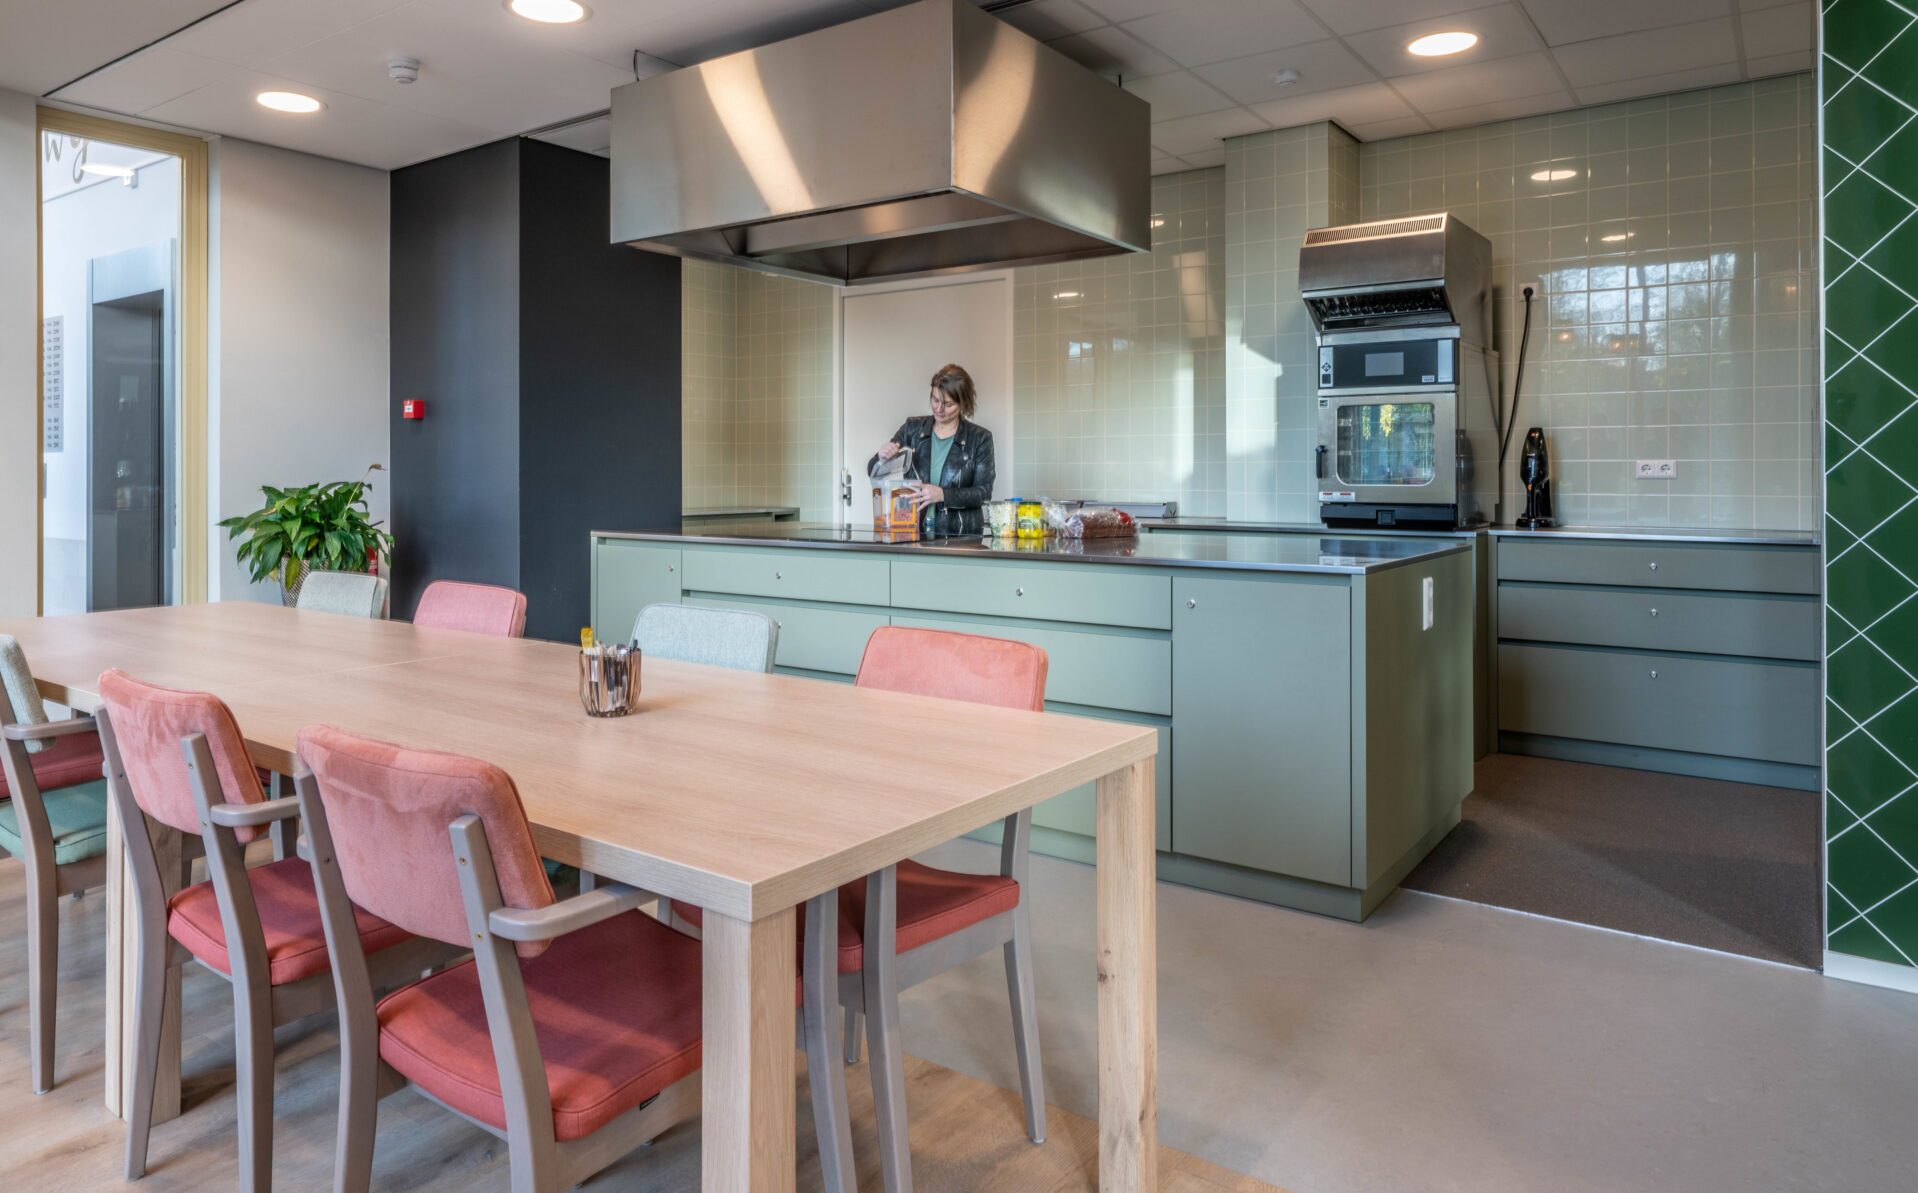 Van Neynsel Zuiderschans, keuken centrale ontmoetingsruimte, 's-Hertogenbosch | Burobas